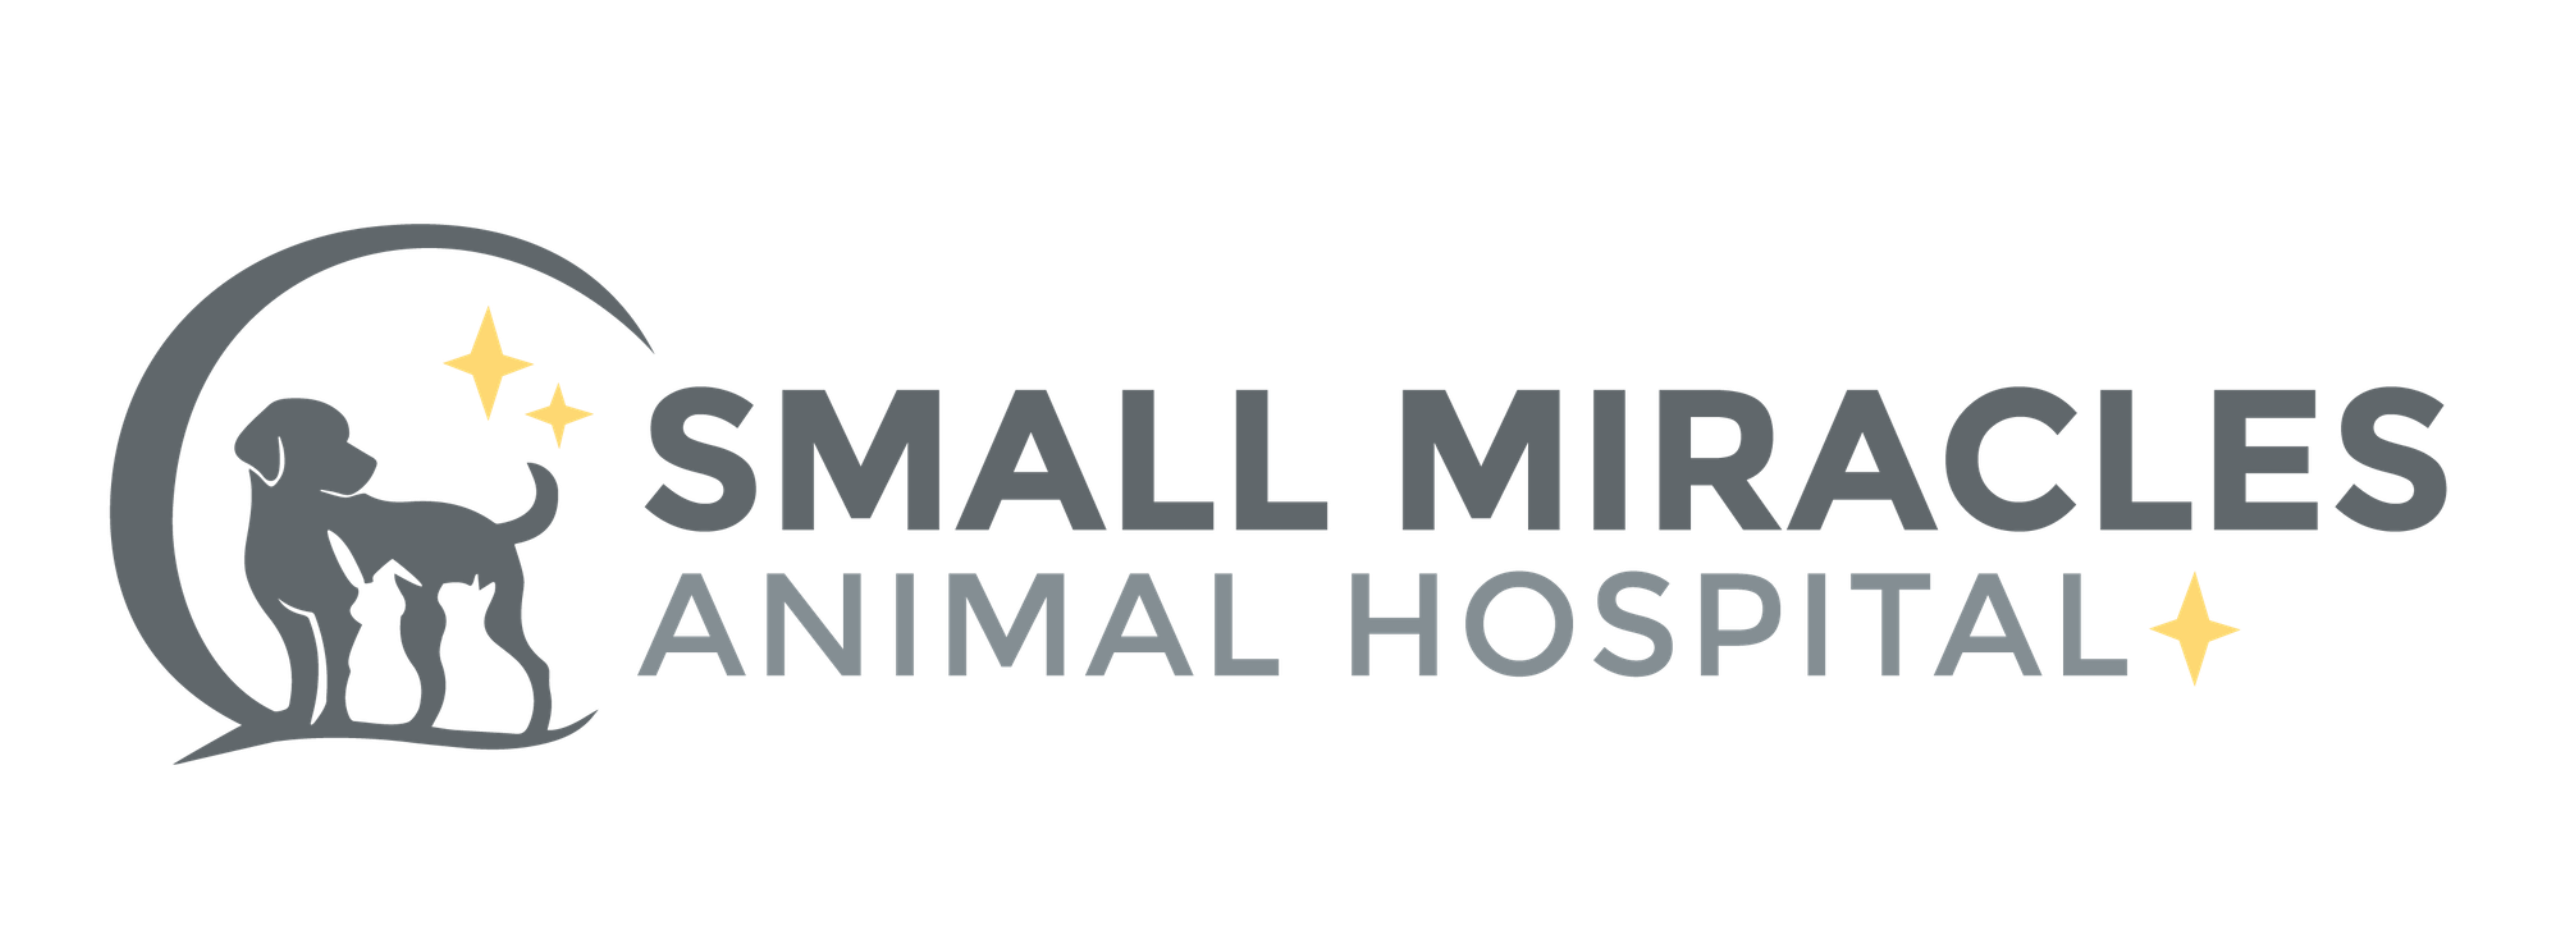 Arnold's Small Miracles Animal Hospital, LLC Logo